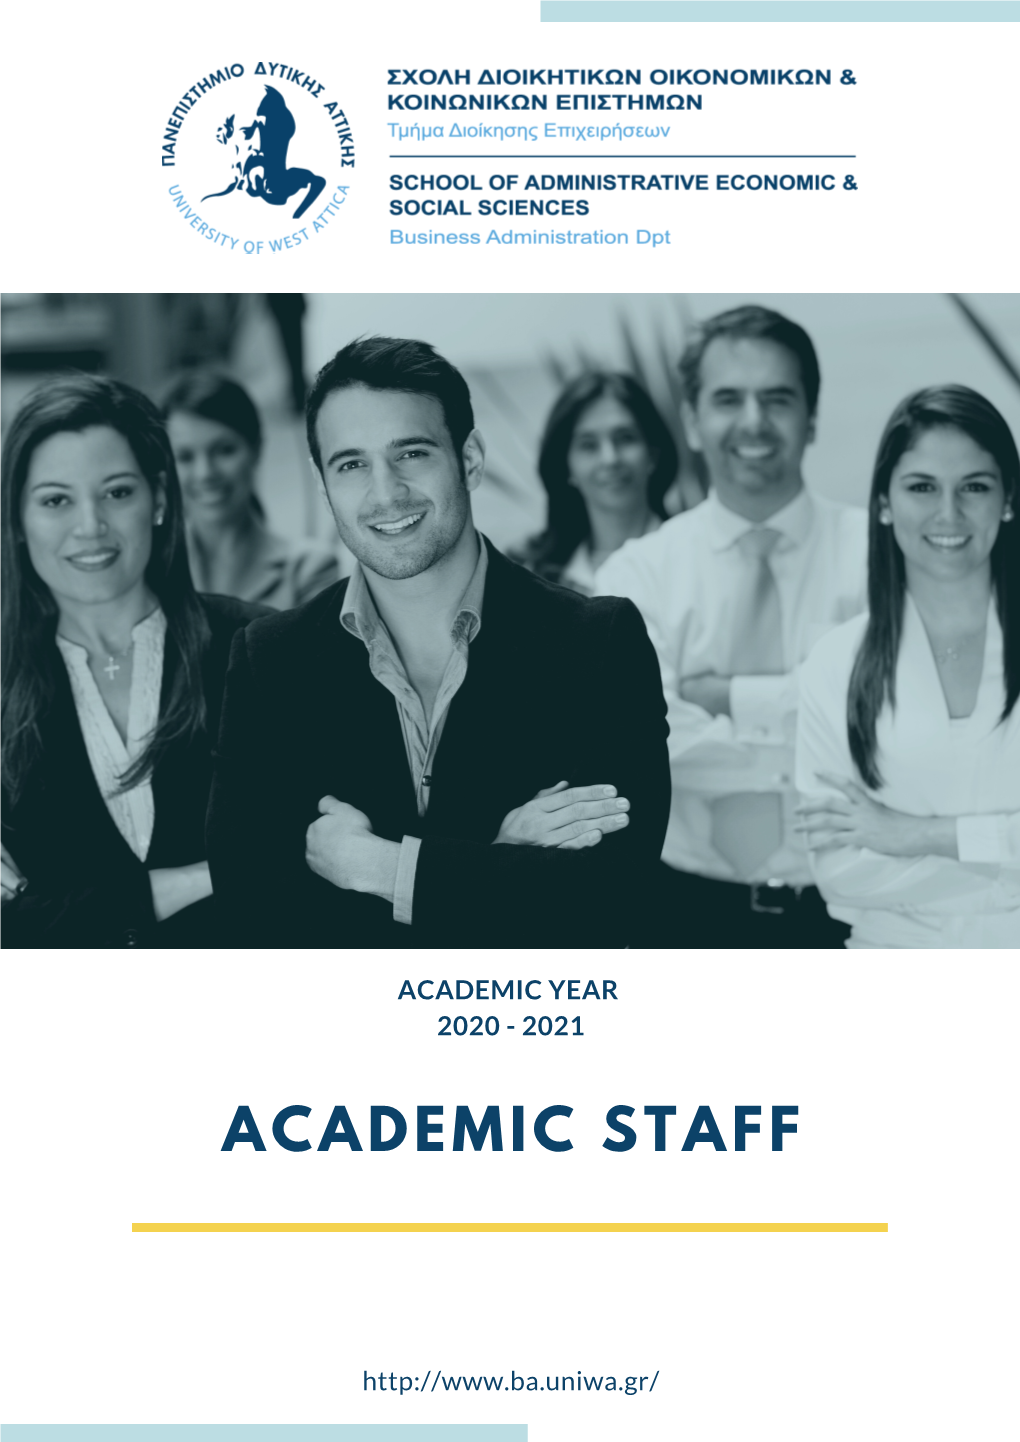 Academic Staff